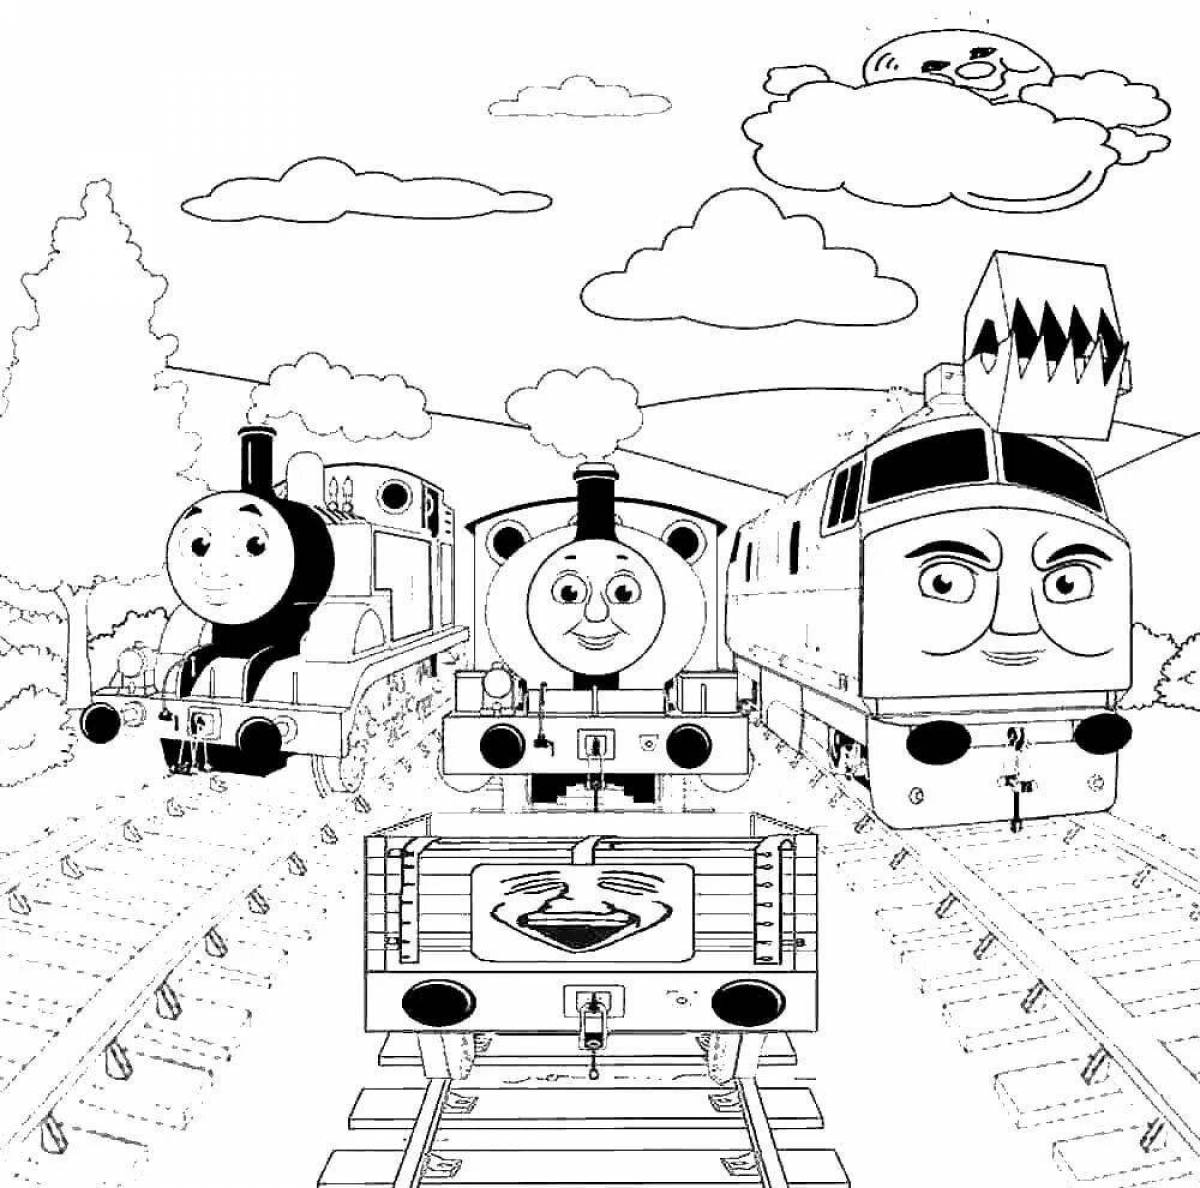 Delightful train cartoon